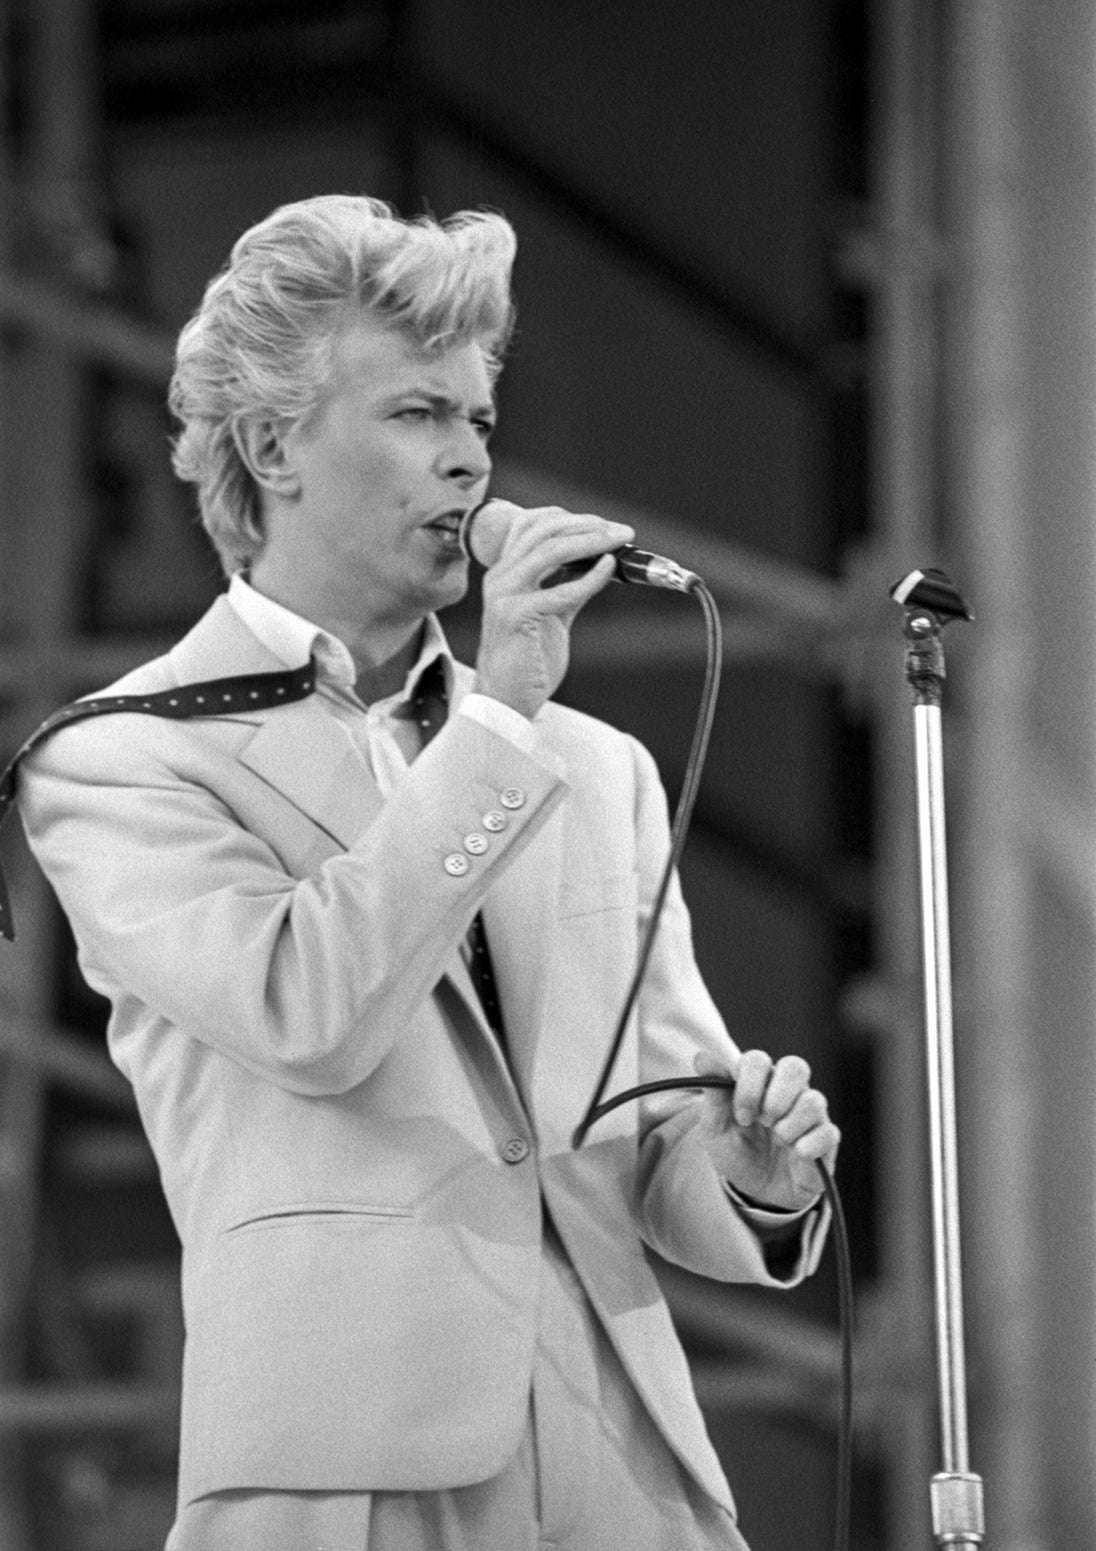 Hans Johnson - David Bowie